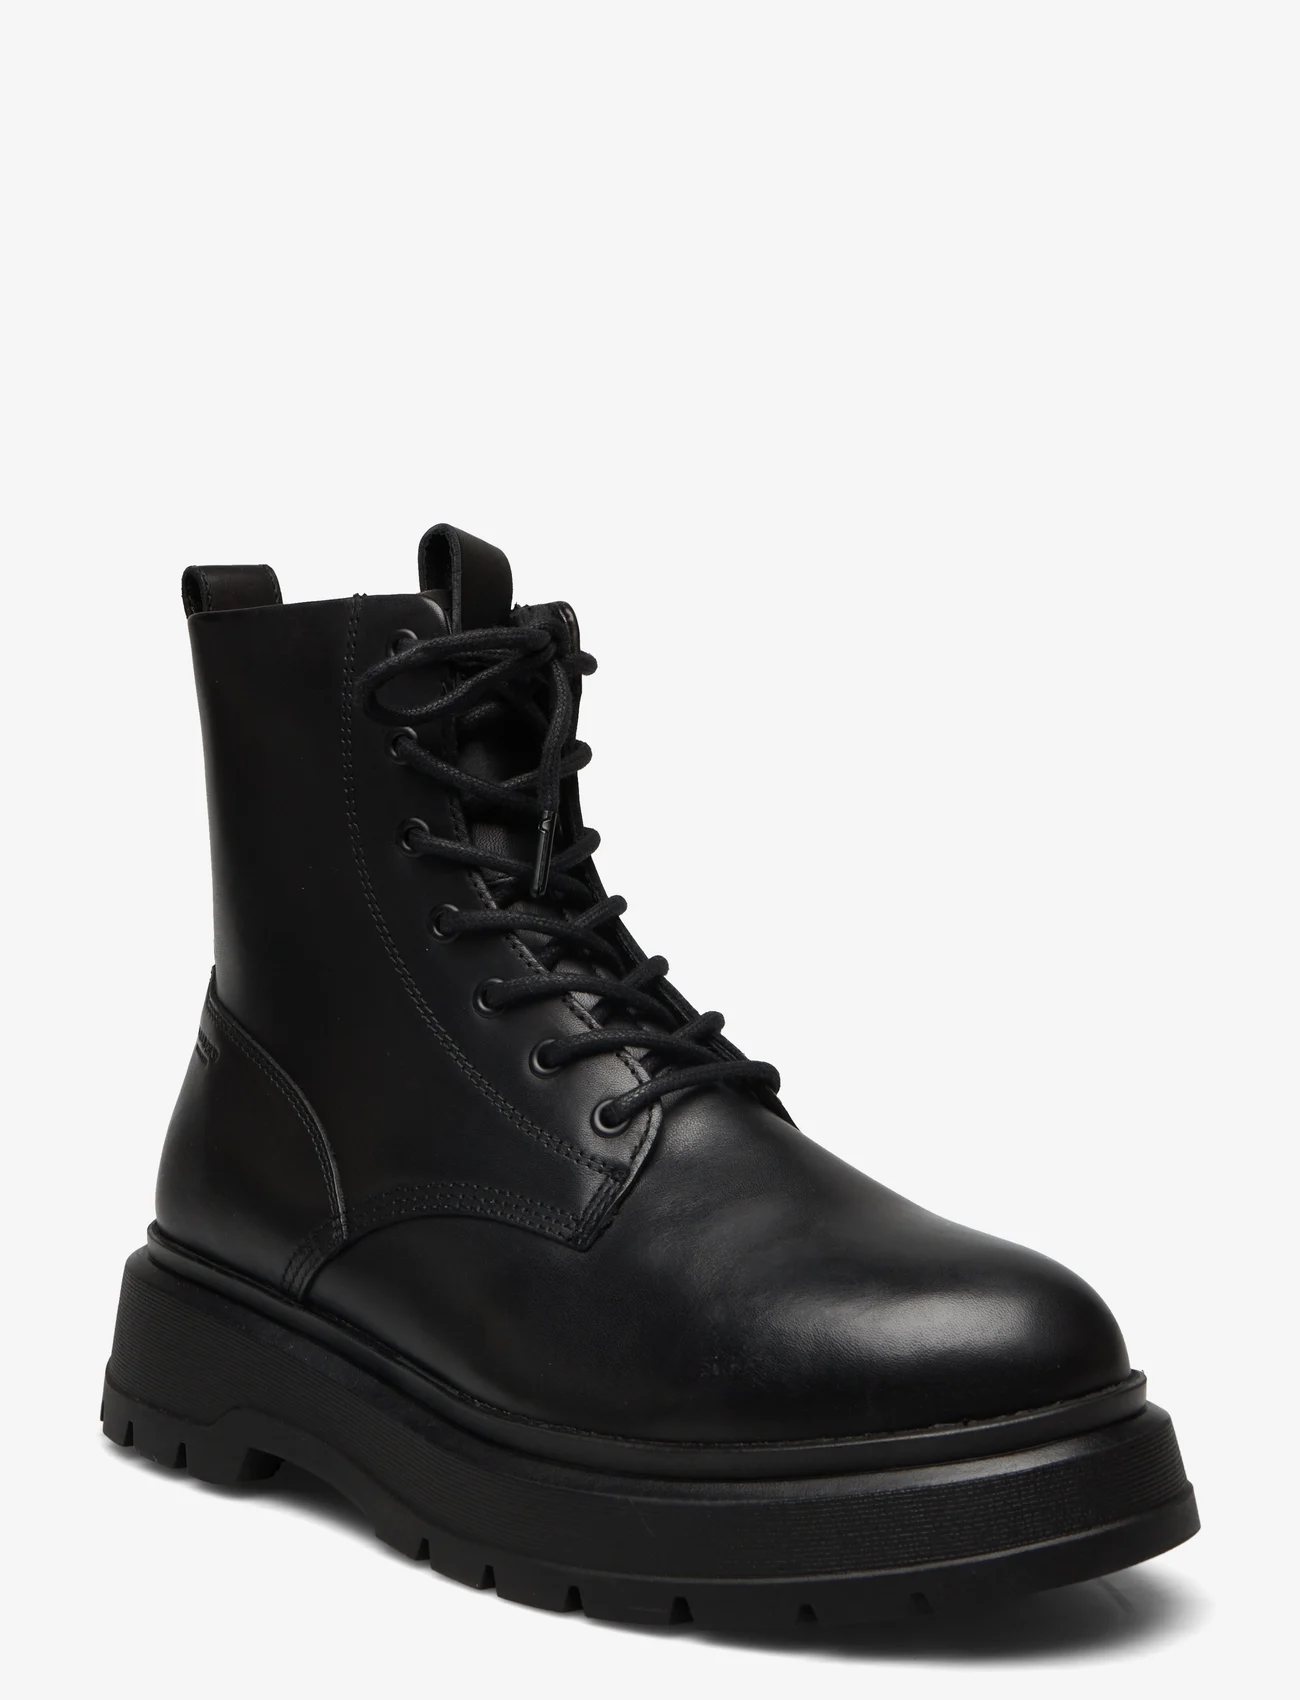 VAGABOND - JEFF - støvler med snøre - black - 0